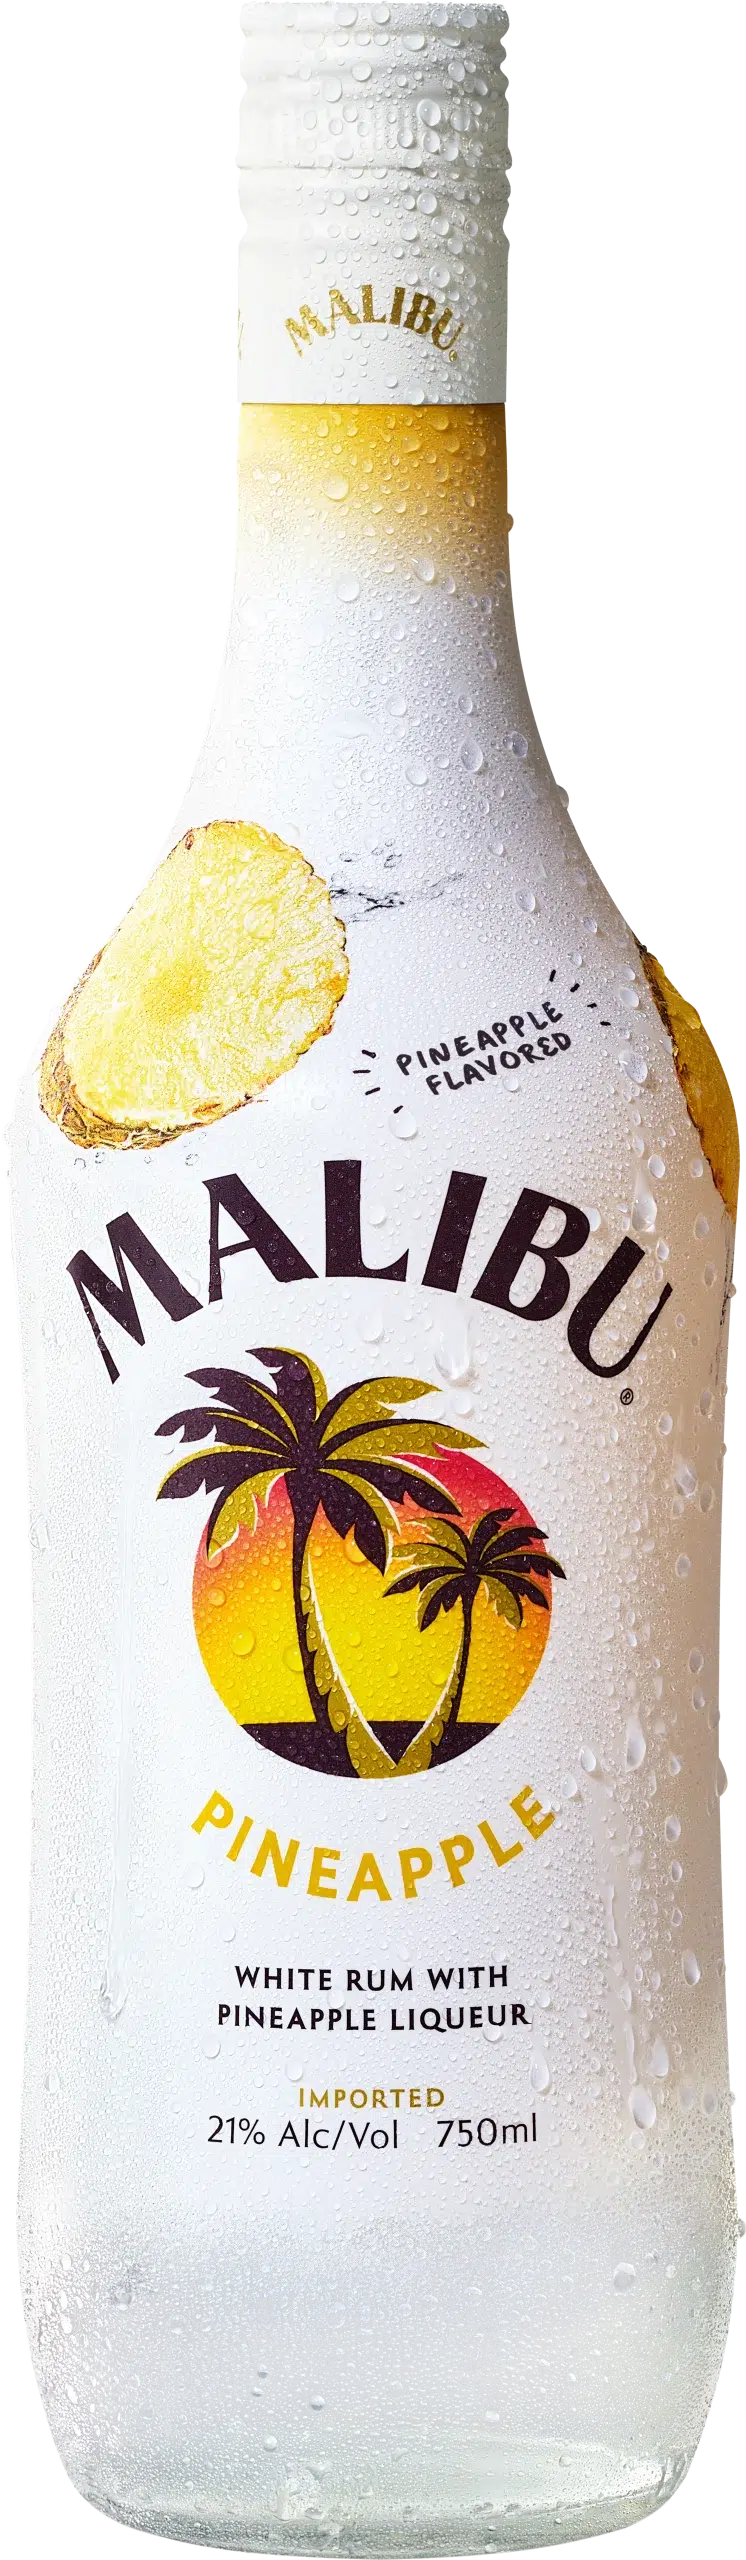 Malibu pineapple bottle